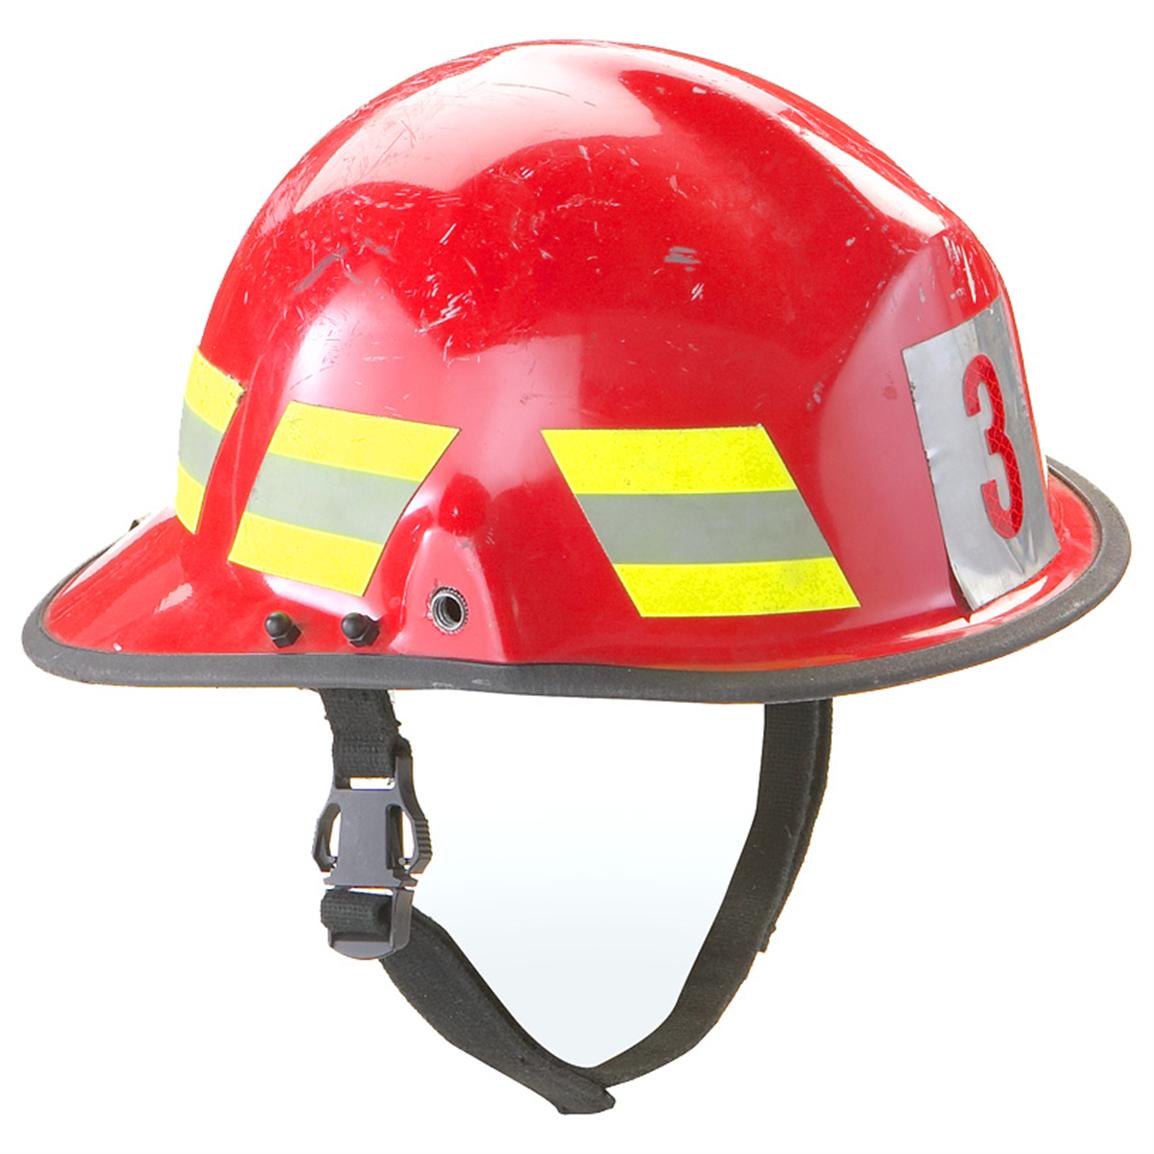 Used Firefighter's Helmet - 108488, at Sportsman's Guide